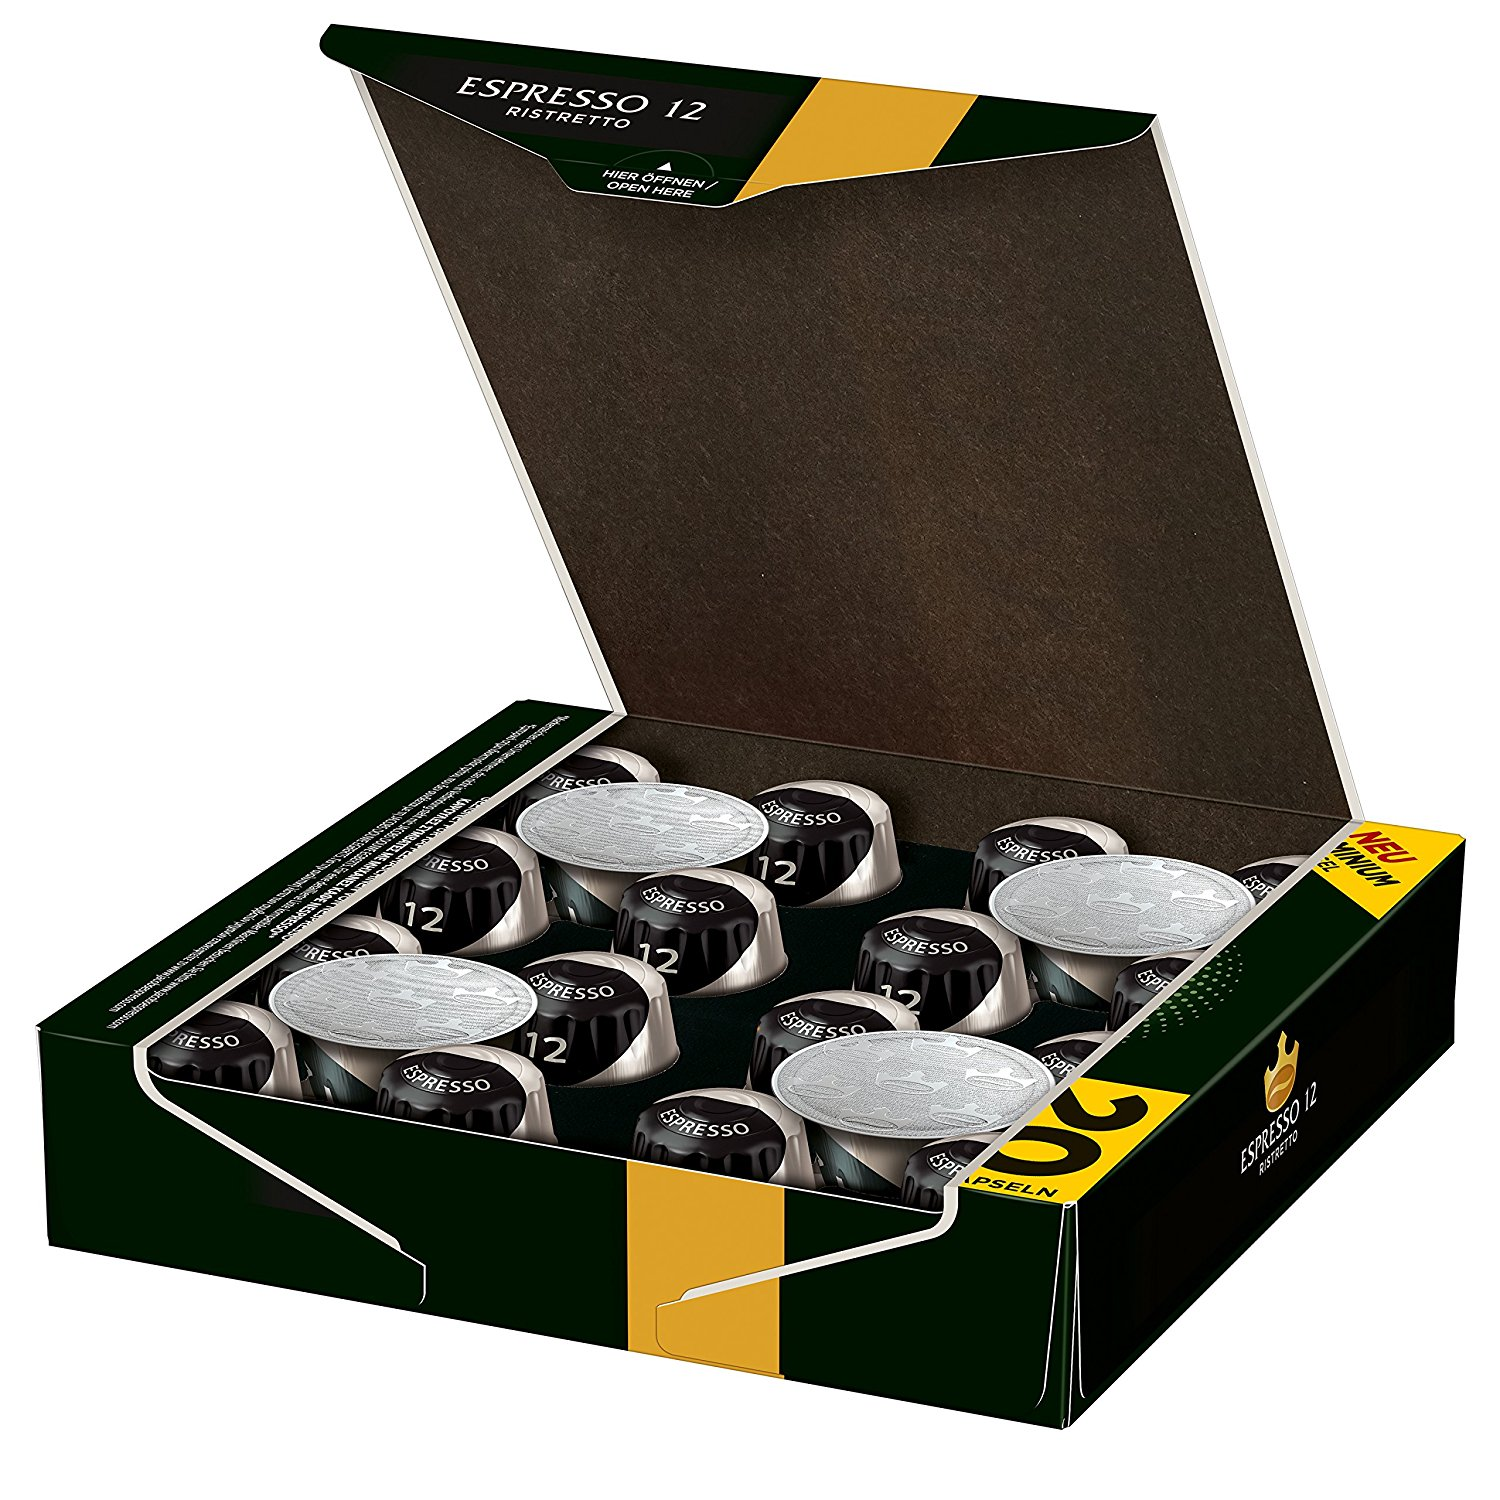 System) Kaffeekapseln (Nespresso x Espresso Ristretto 12 Nespresso®* 20 10 kompatible JACOBS